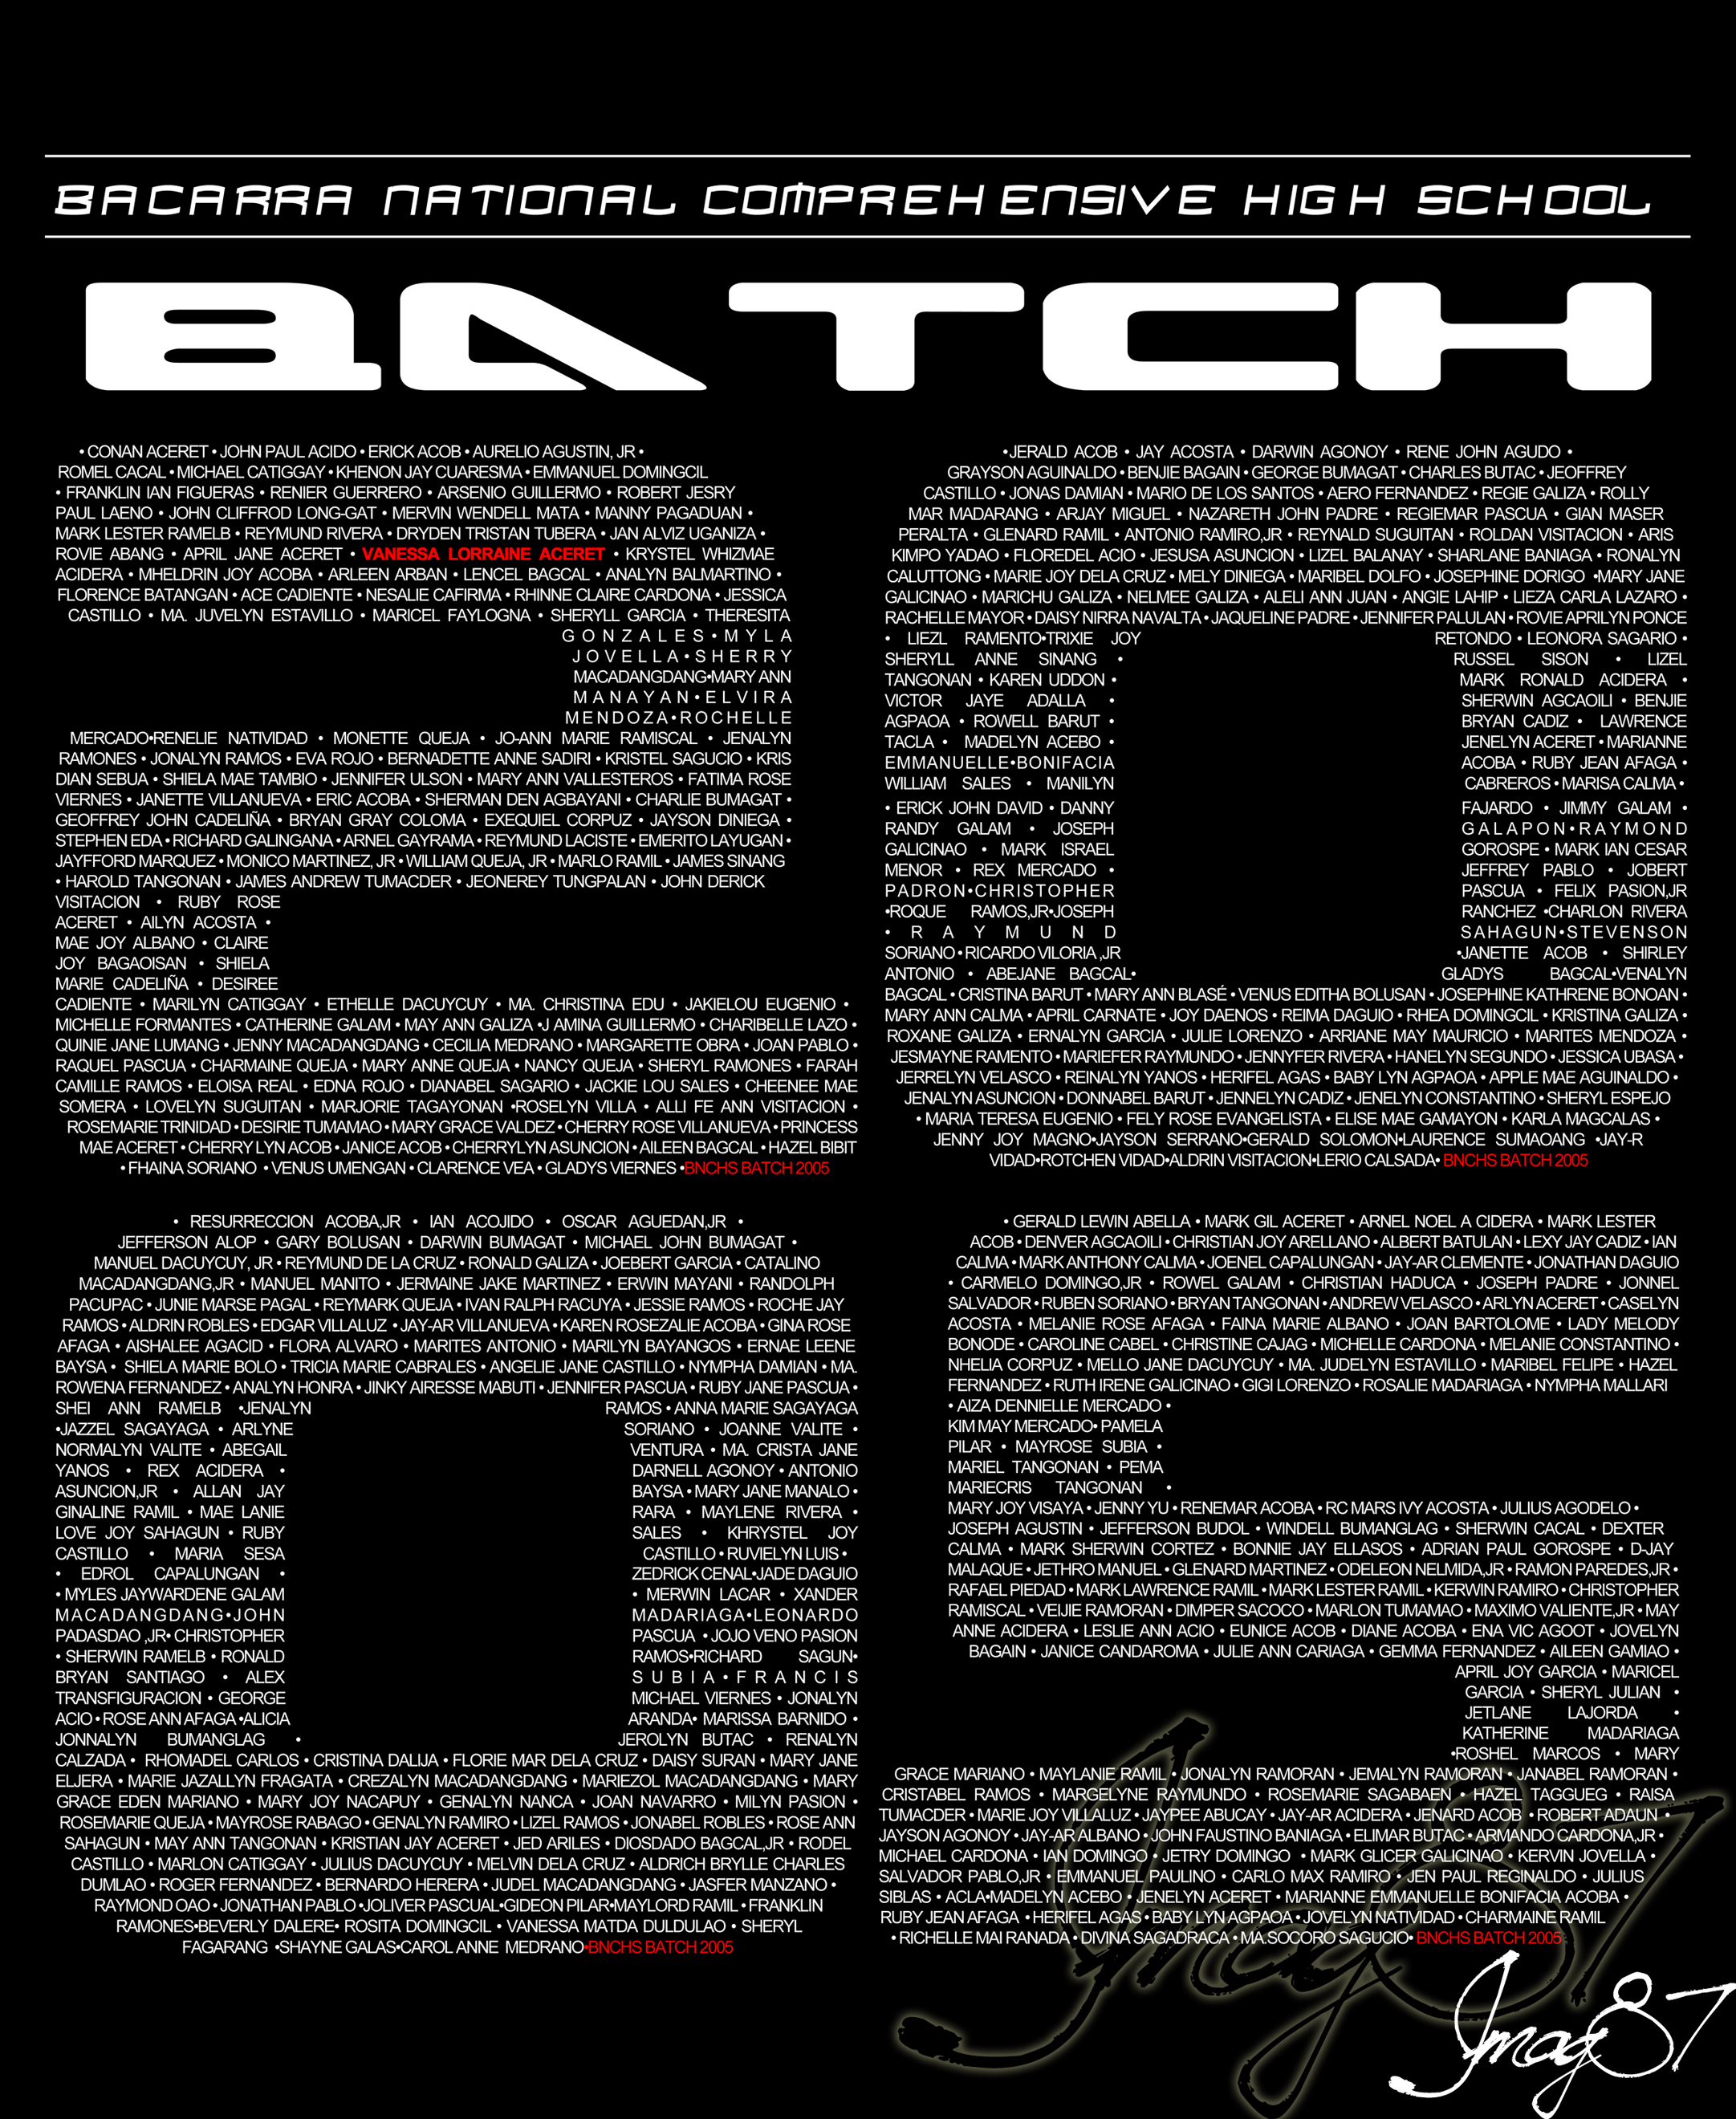 bnchs 2005 tshirt layout by jmag87 on DeviantArt